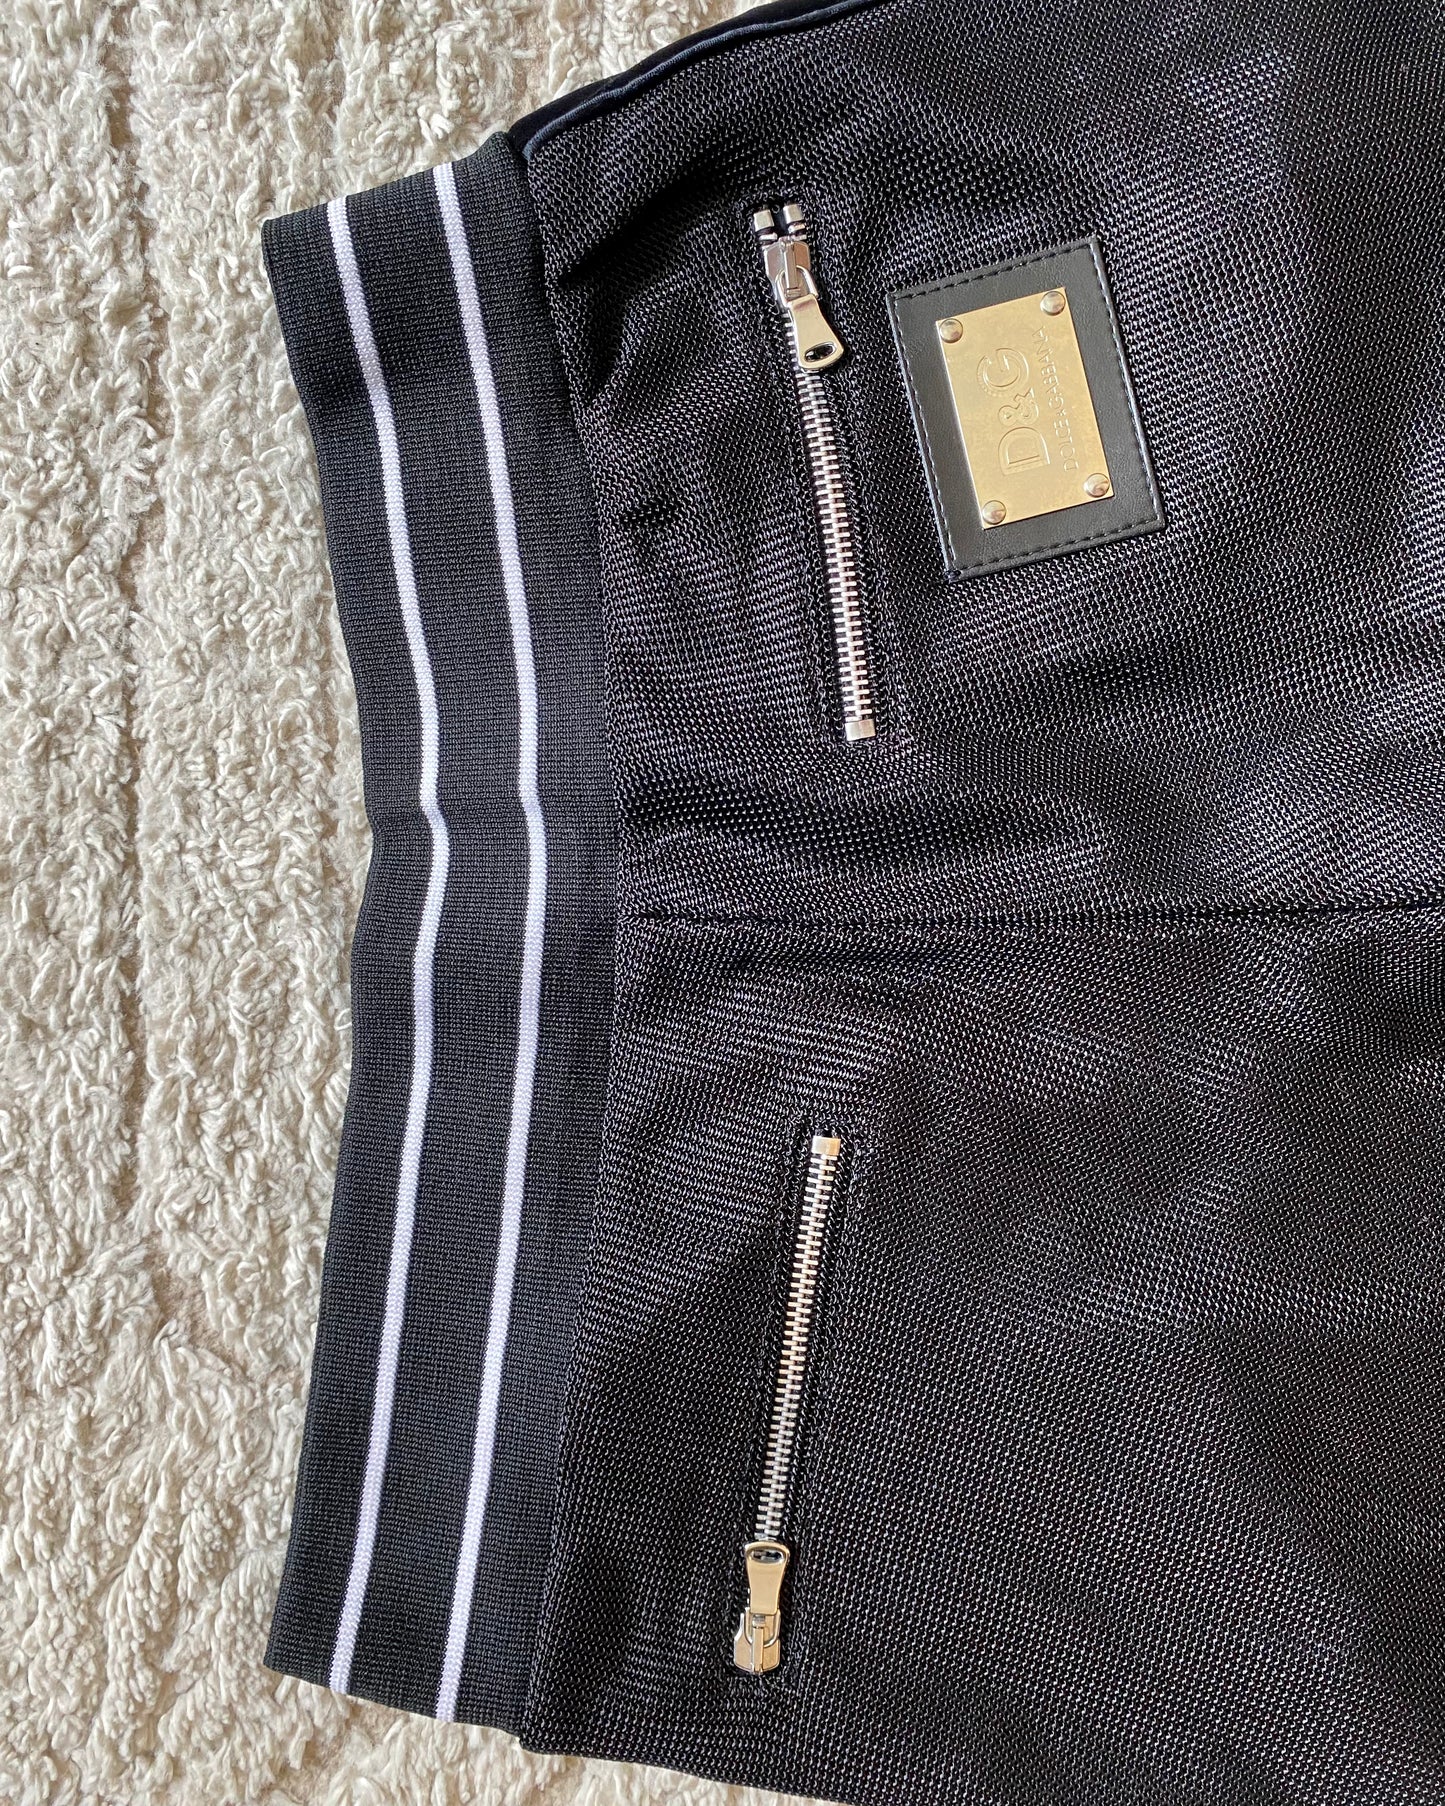 00s Dolce & Gabbana Multi Metal Zips Pants (S)